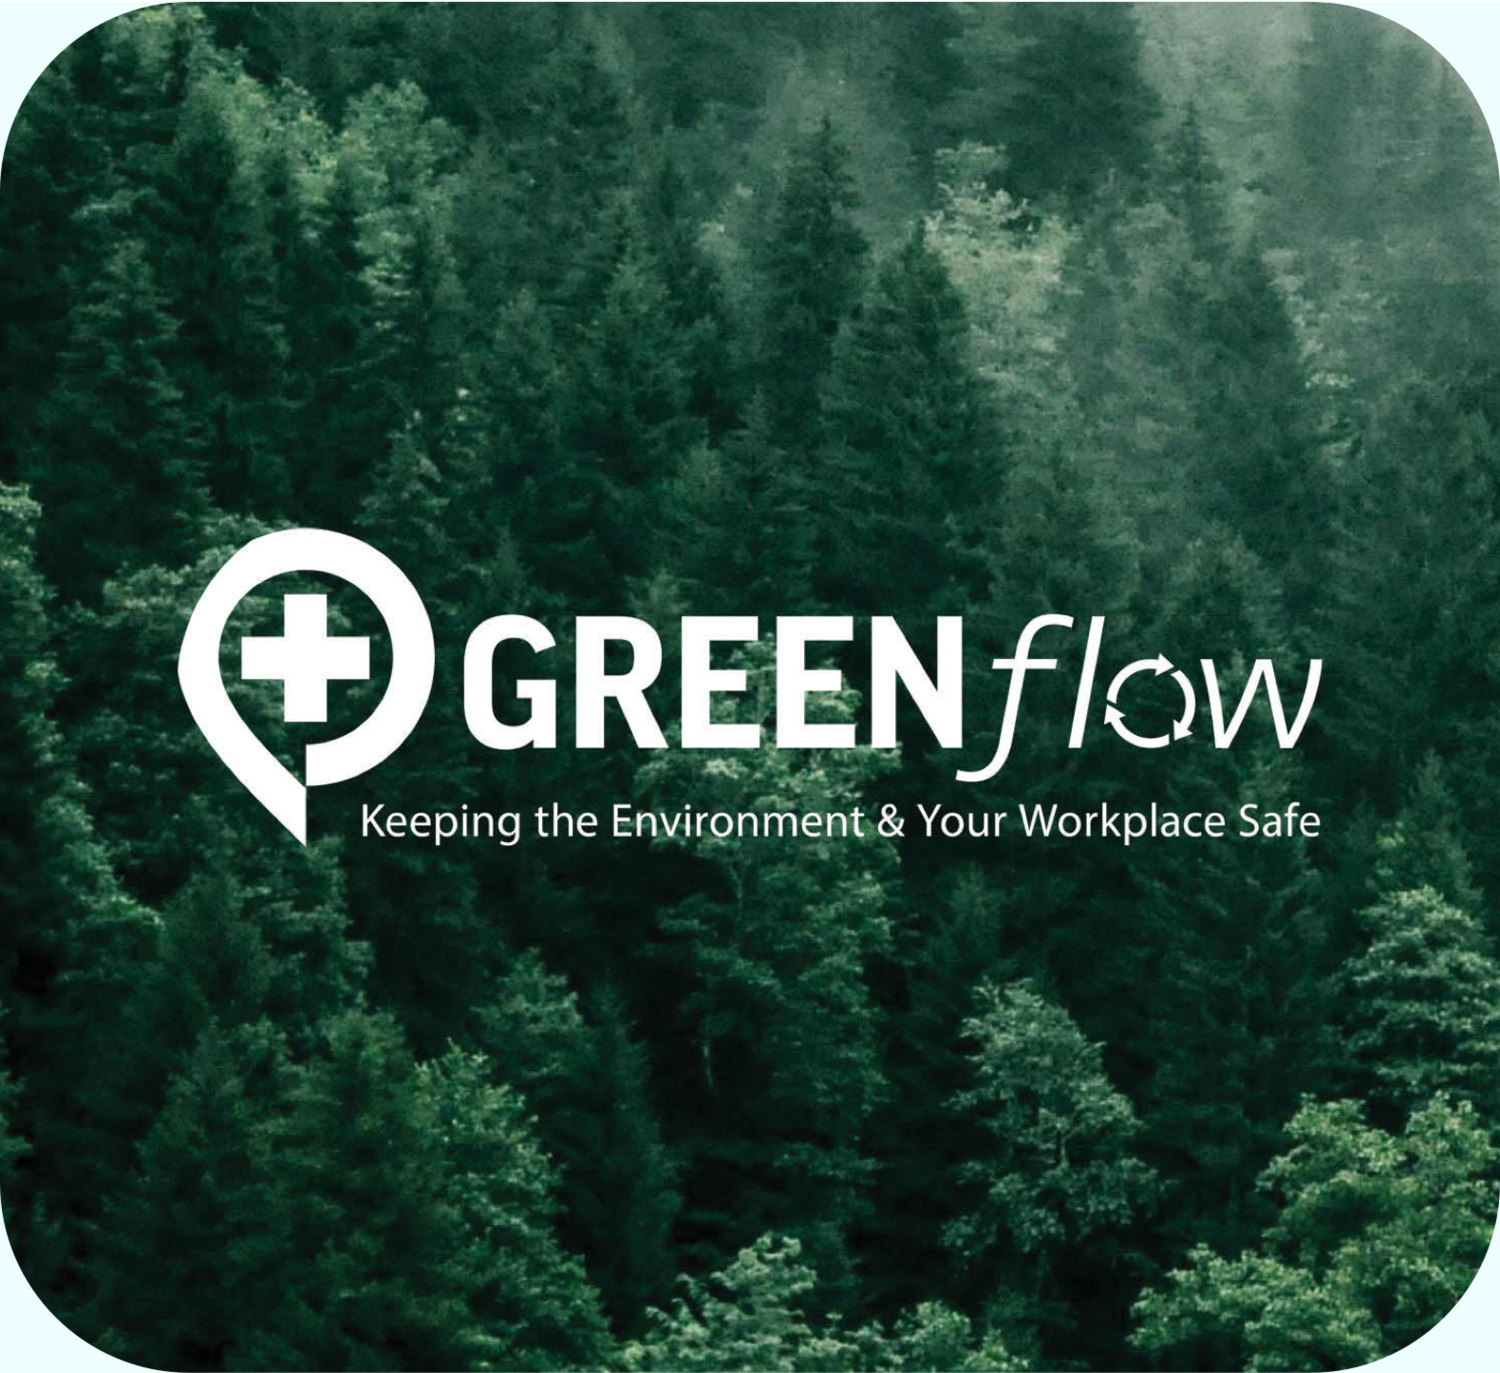 Greenflow